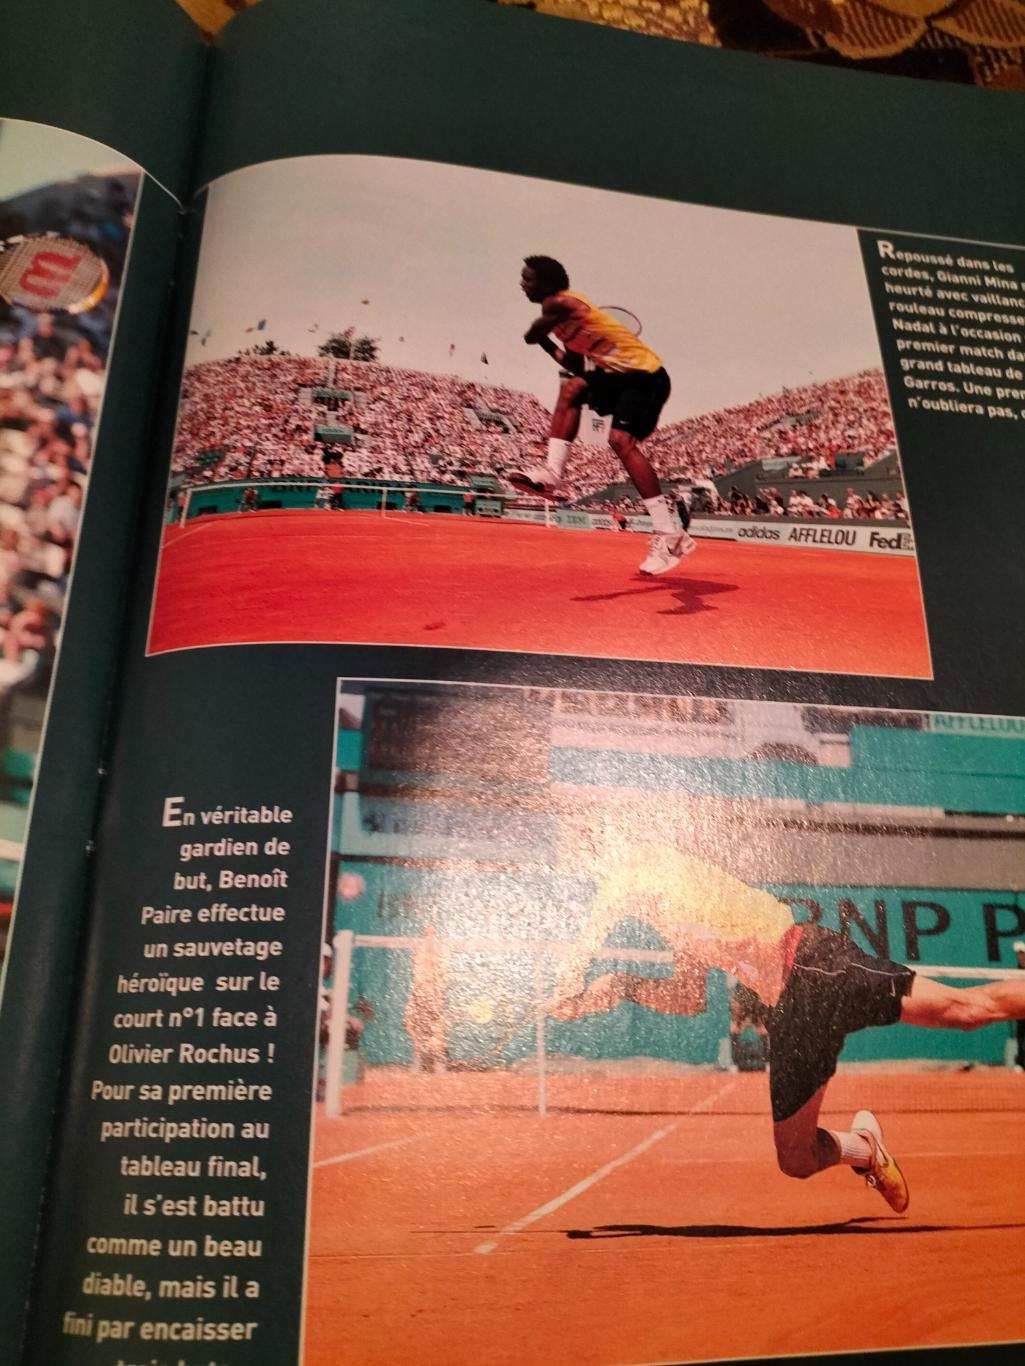 Французский журнал Tennis magazine 2010 год про итоги Ролан Гаррос. 4